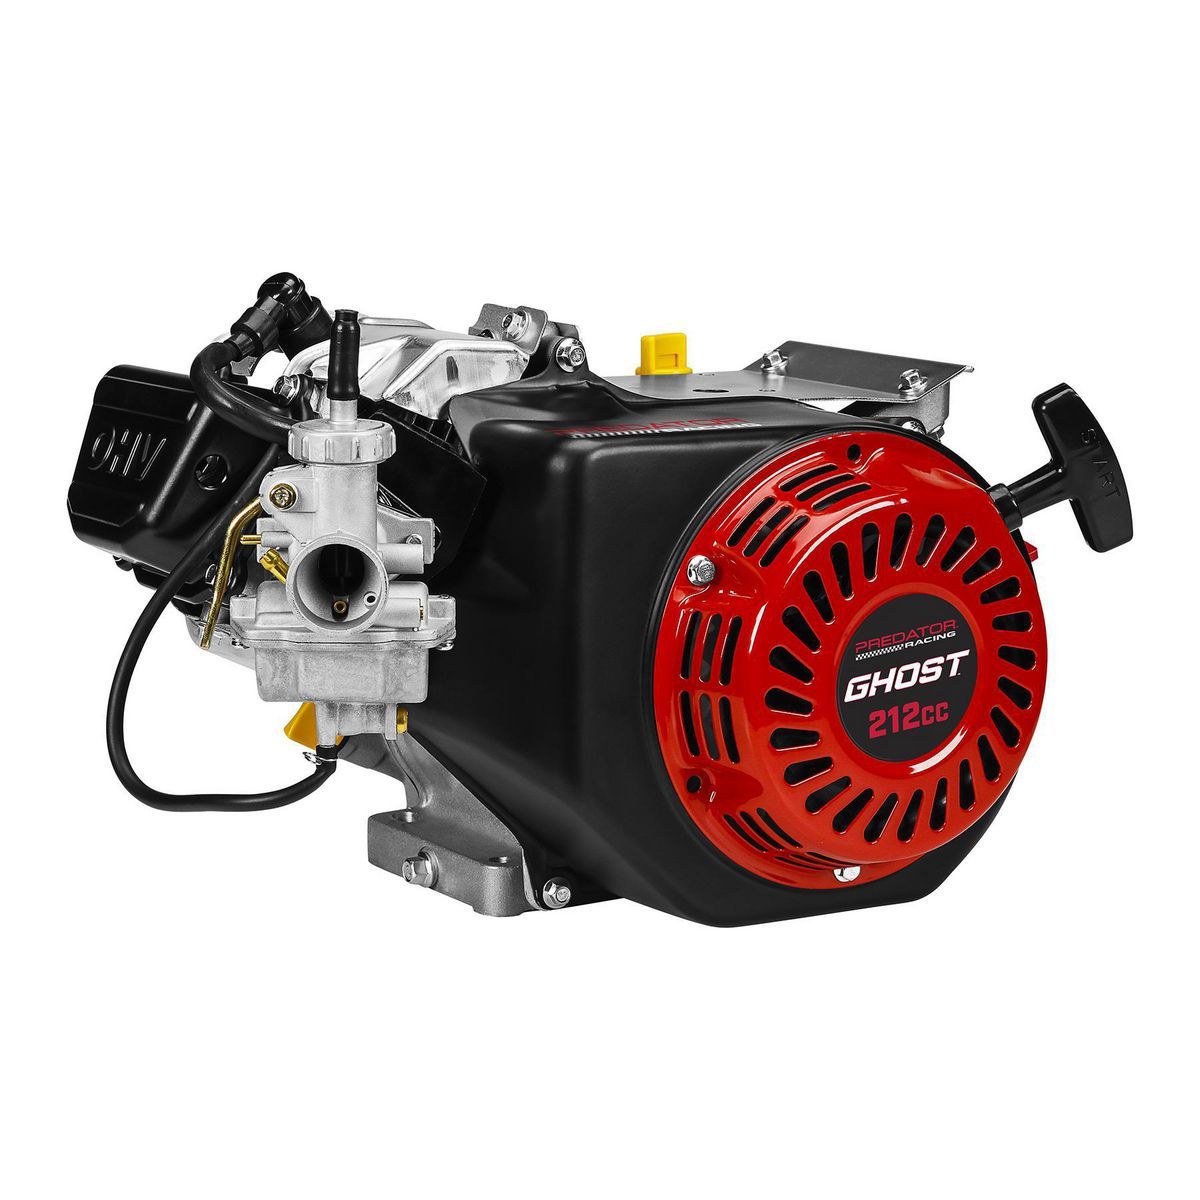 212cc GHOST™ OHV Horizontal Shaft Kart Racing Engine